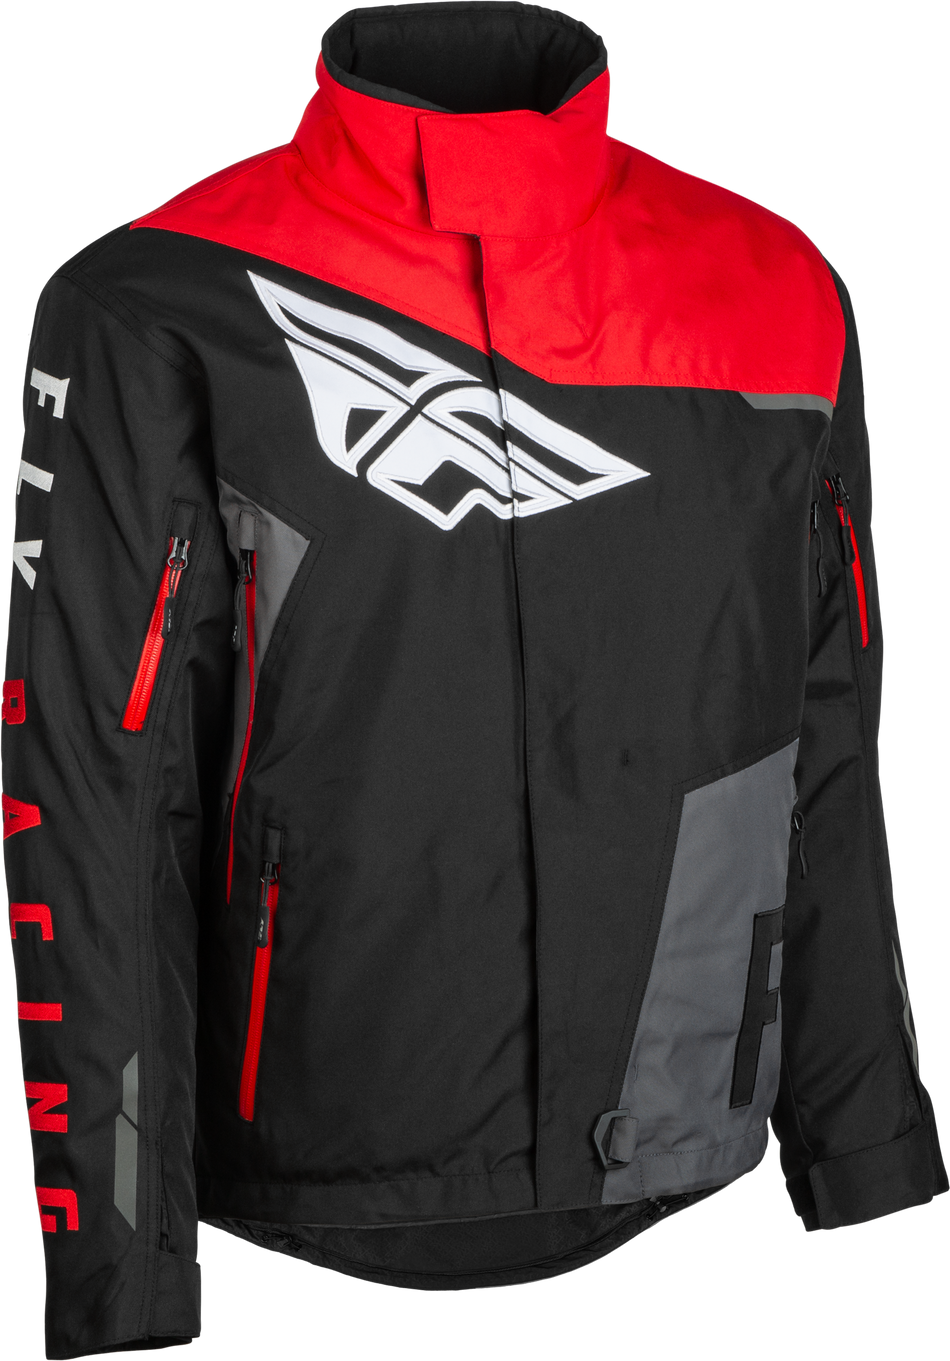 FLY RACING Snx Pro Jacket Black/Grey/Red 4x 470-41174X